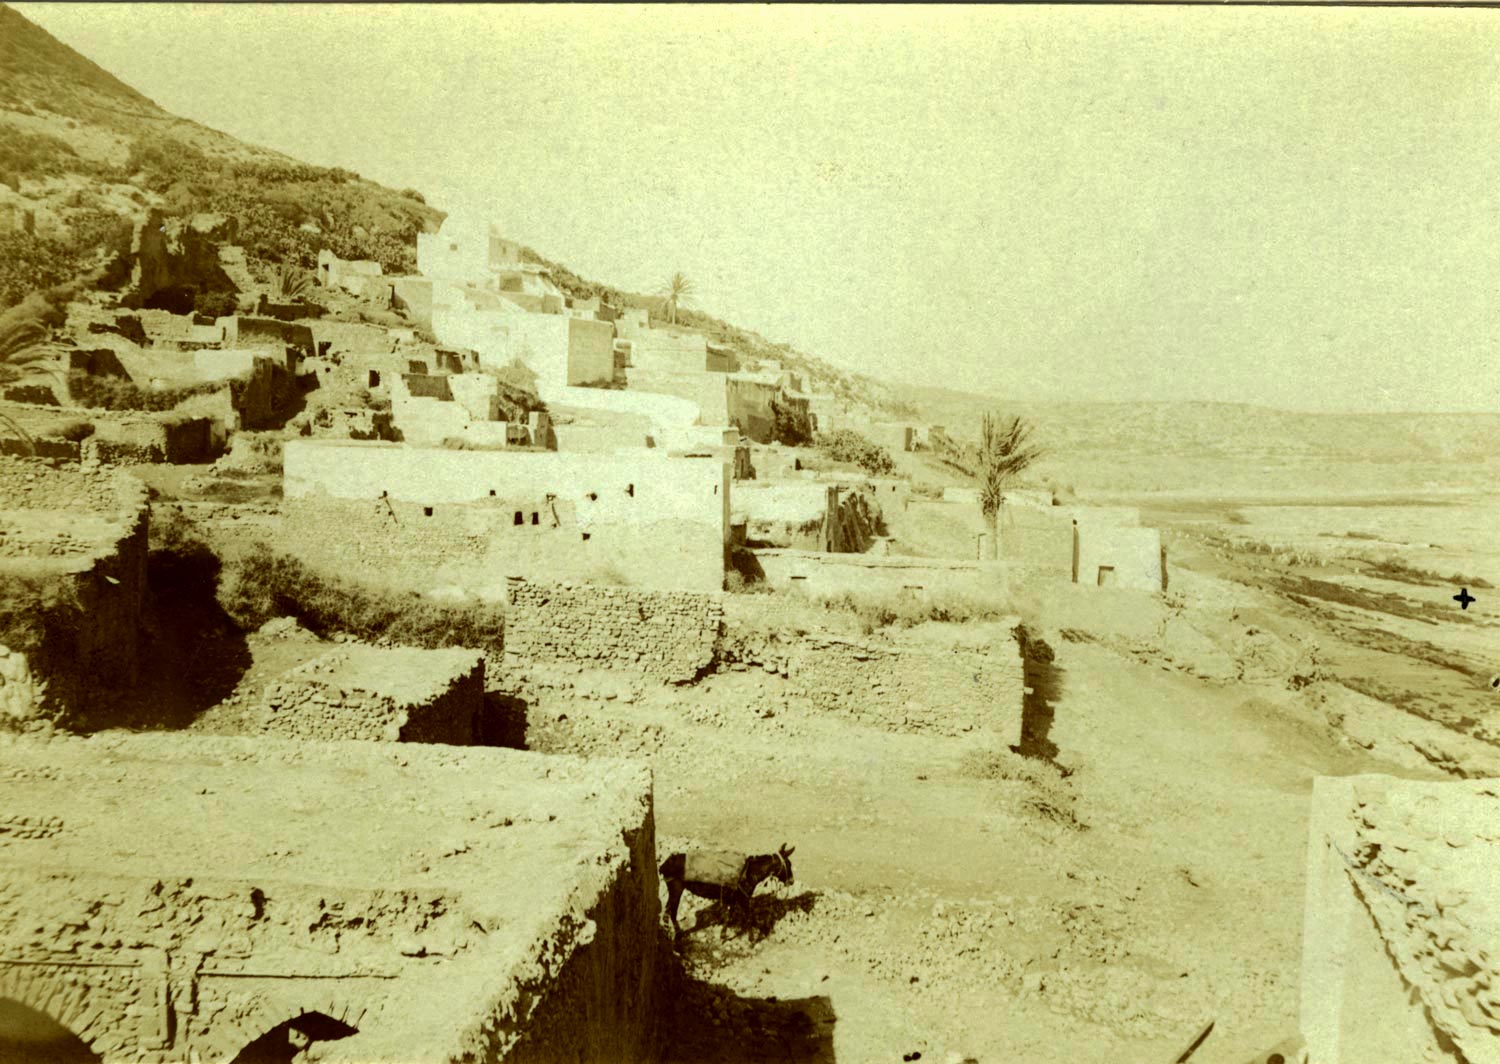 View of Marabout in Aït Ougrram, le Quartier du Marabout Sidi Boulknadel - Ougrram, Agourram